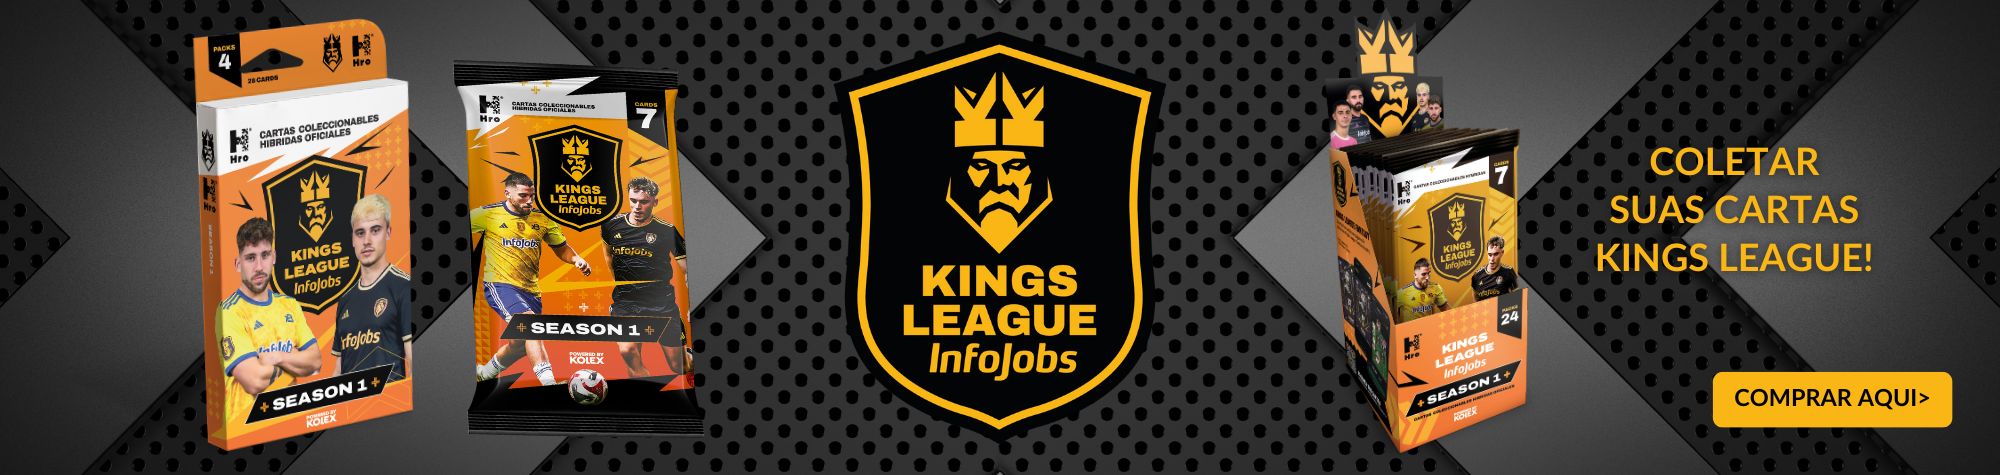 Cartas Kings League